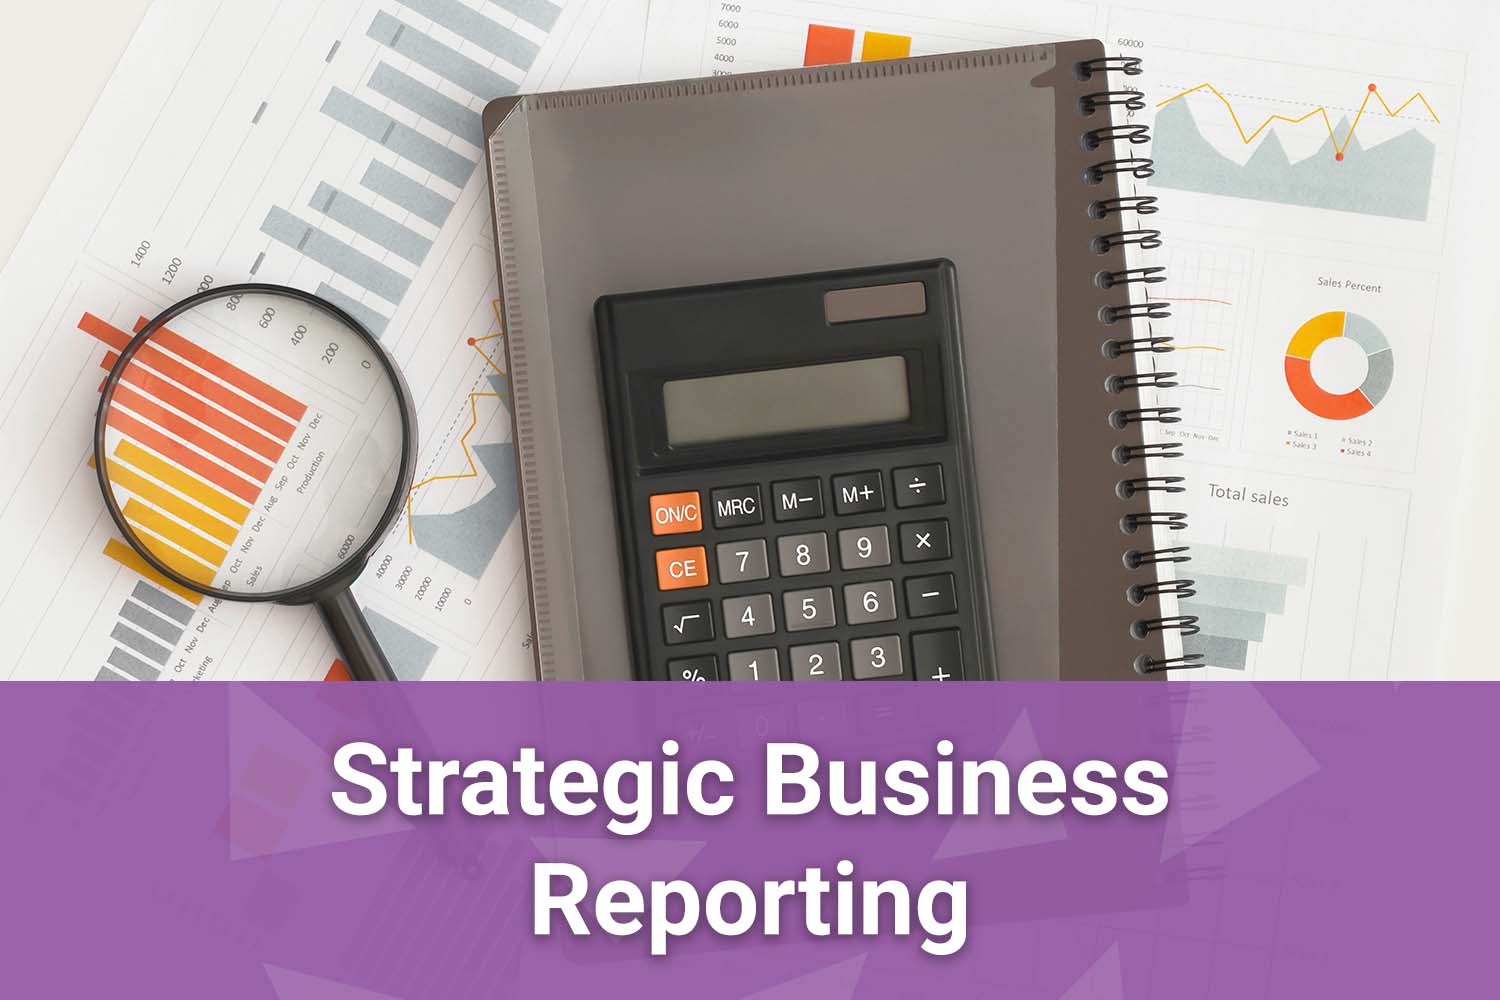 Strategic Business Reporting